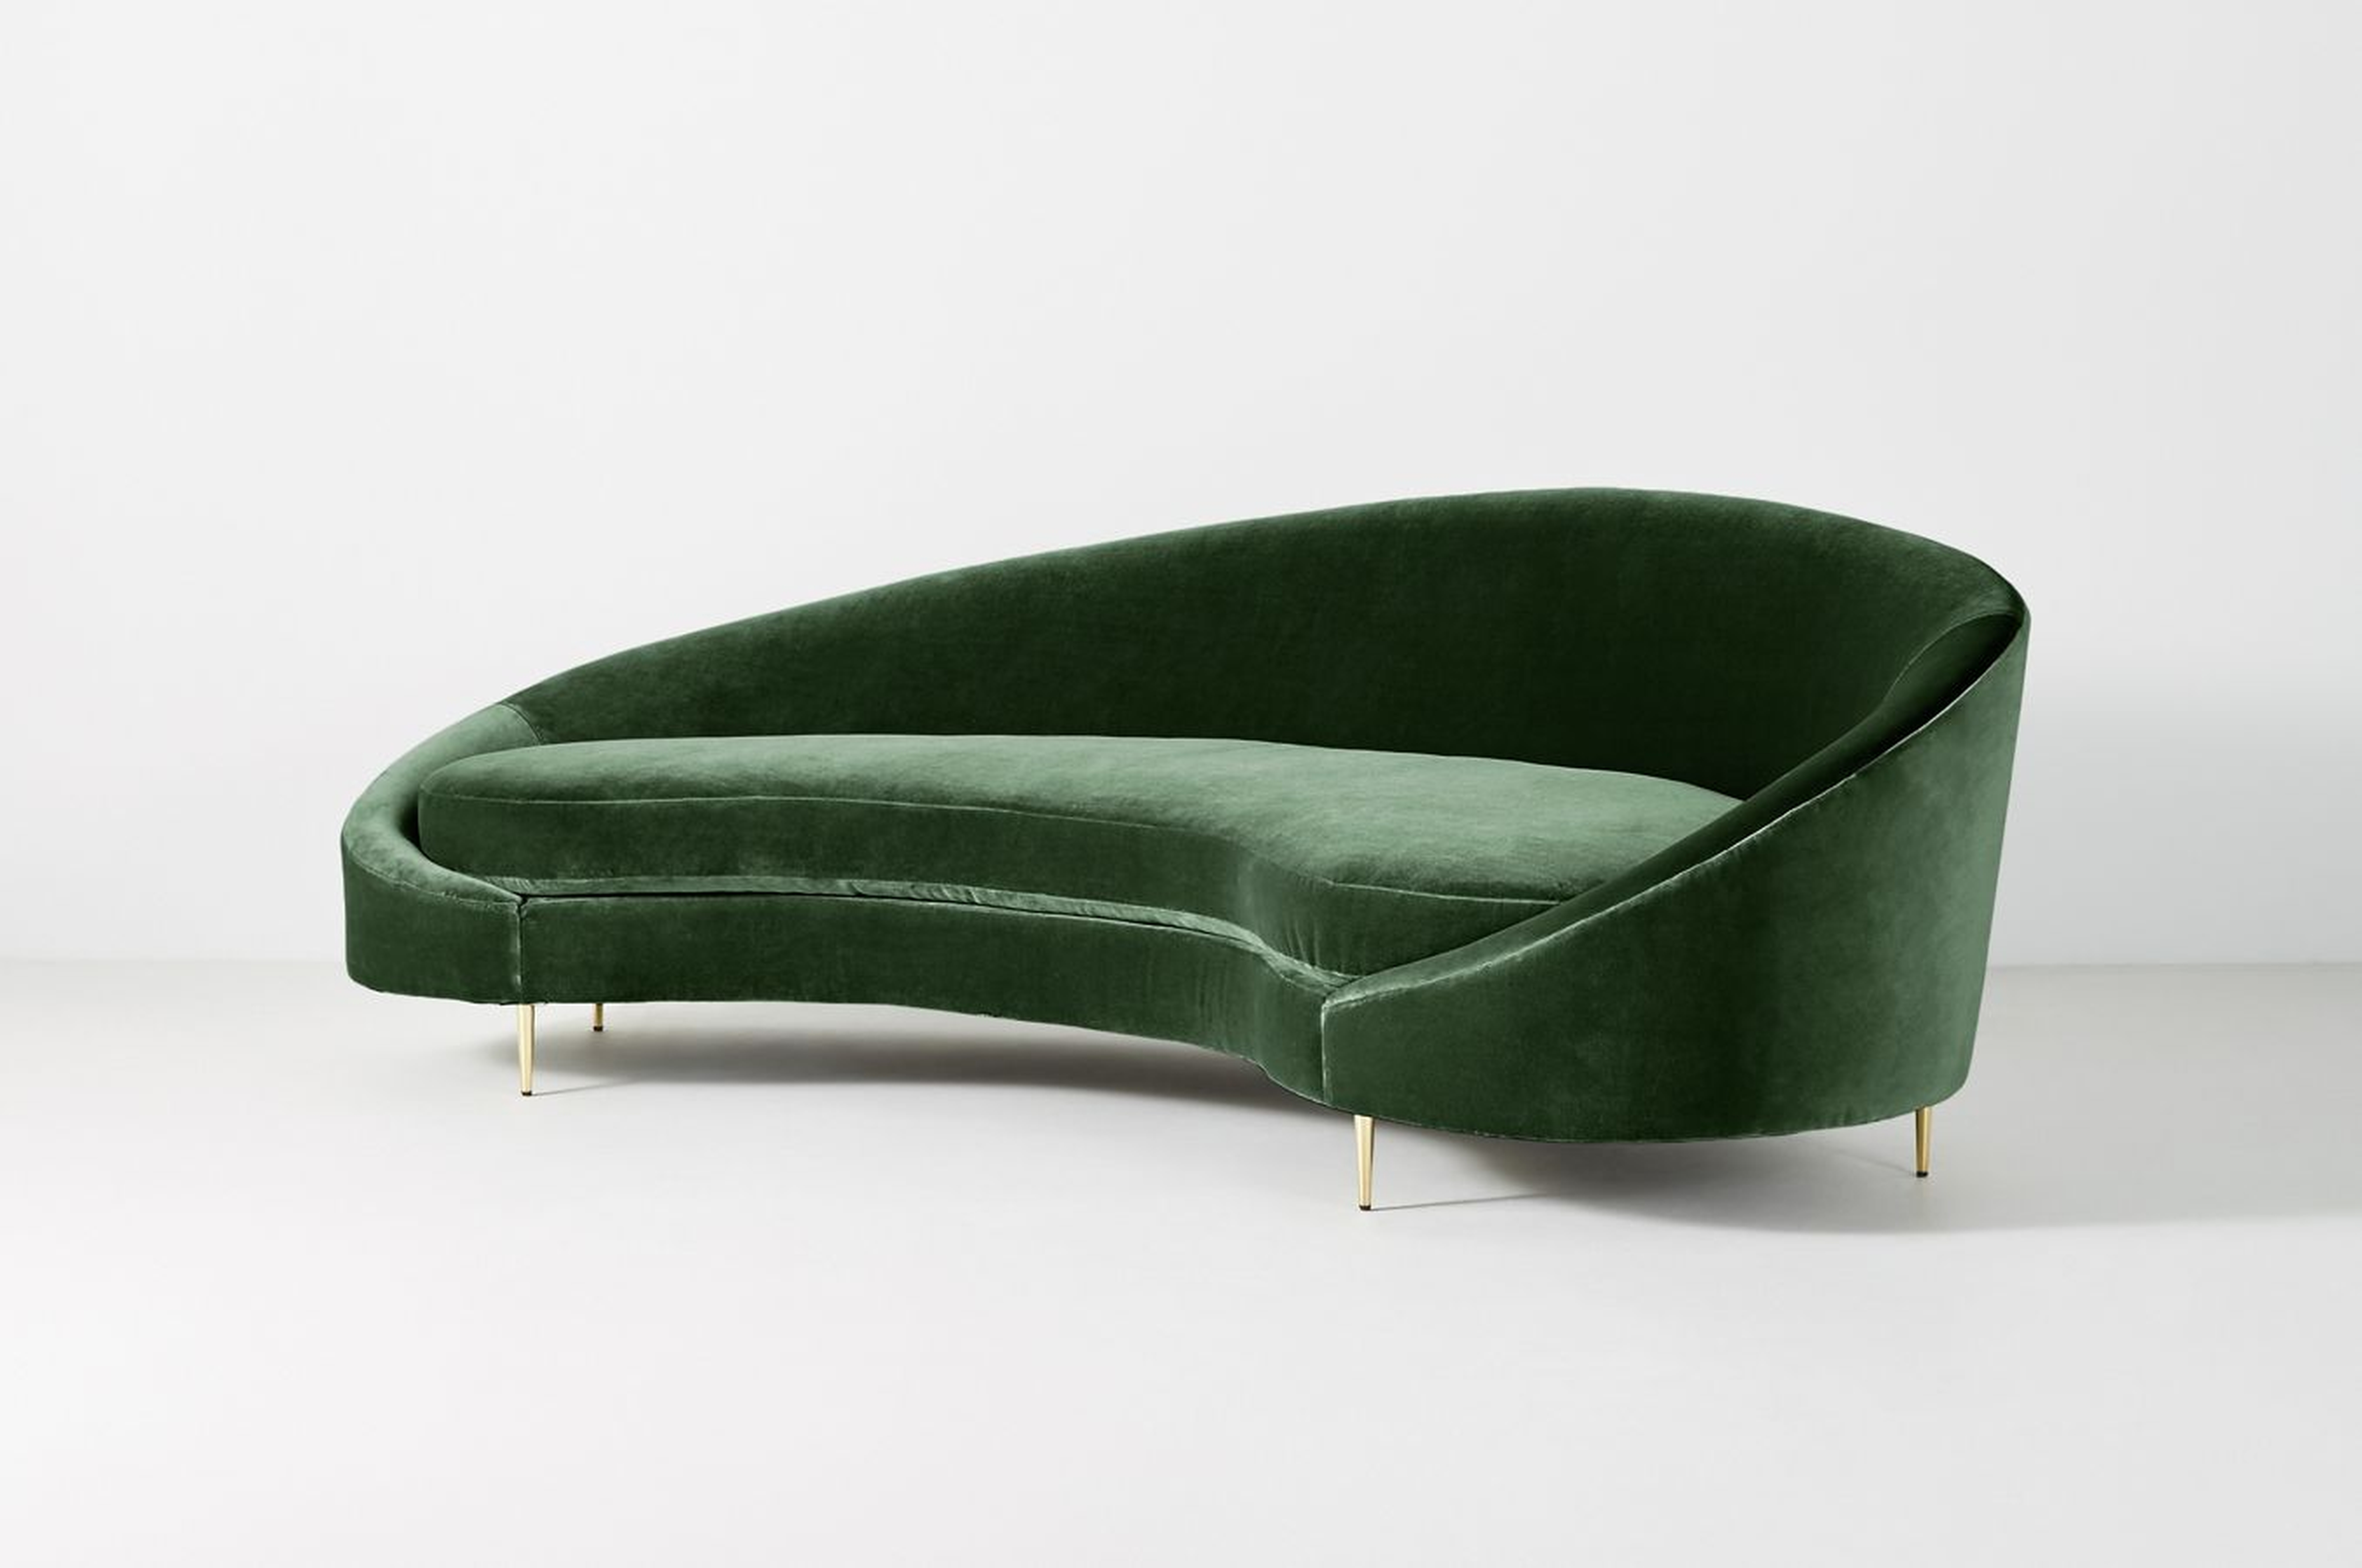 Asymmetrical Serpentine Sofa By Anthropologie in Green - Anthropologie